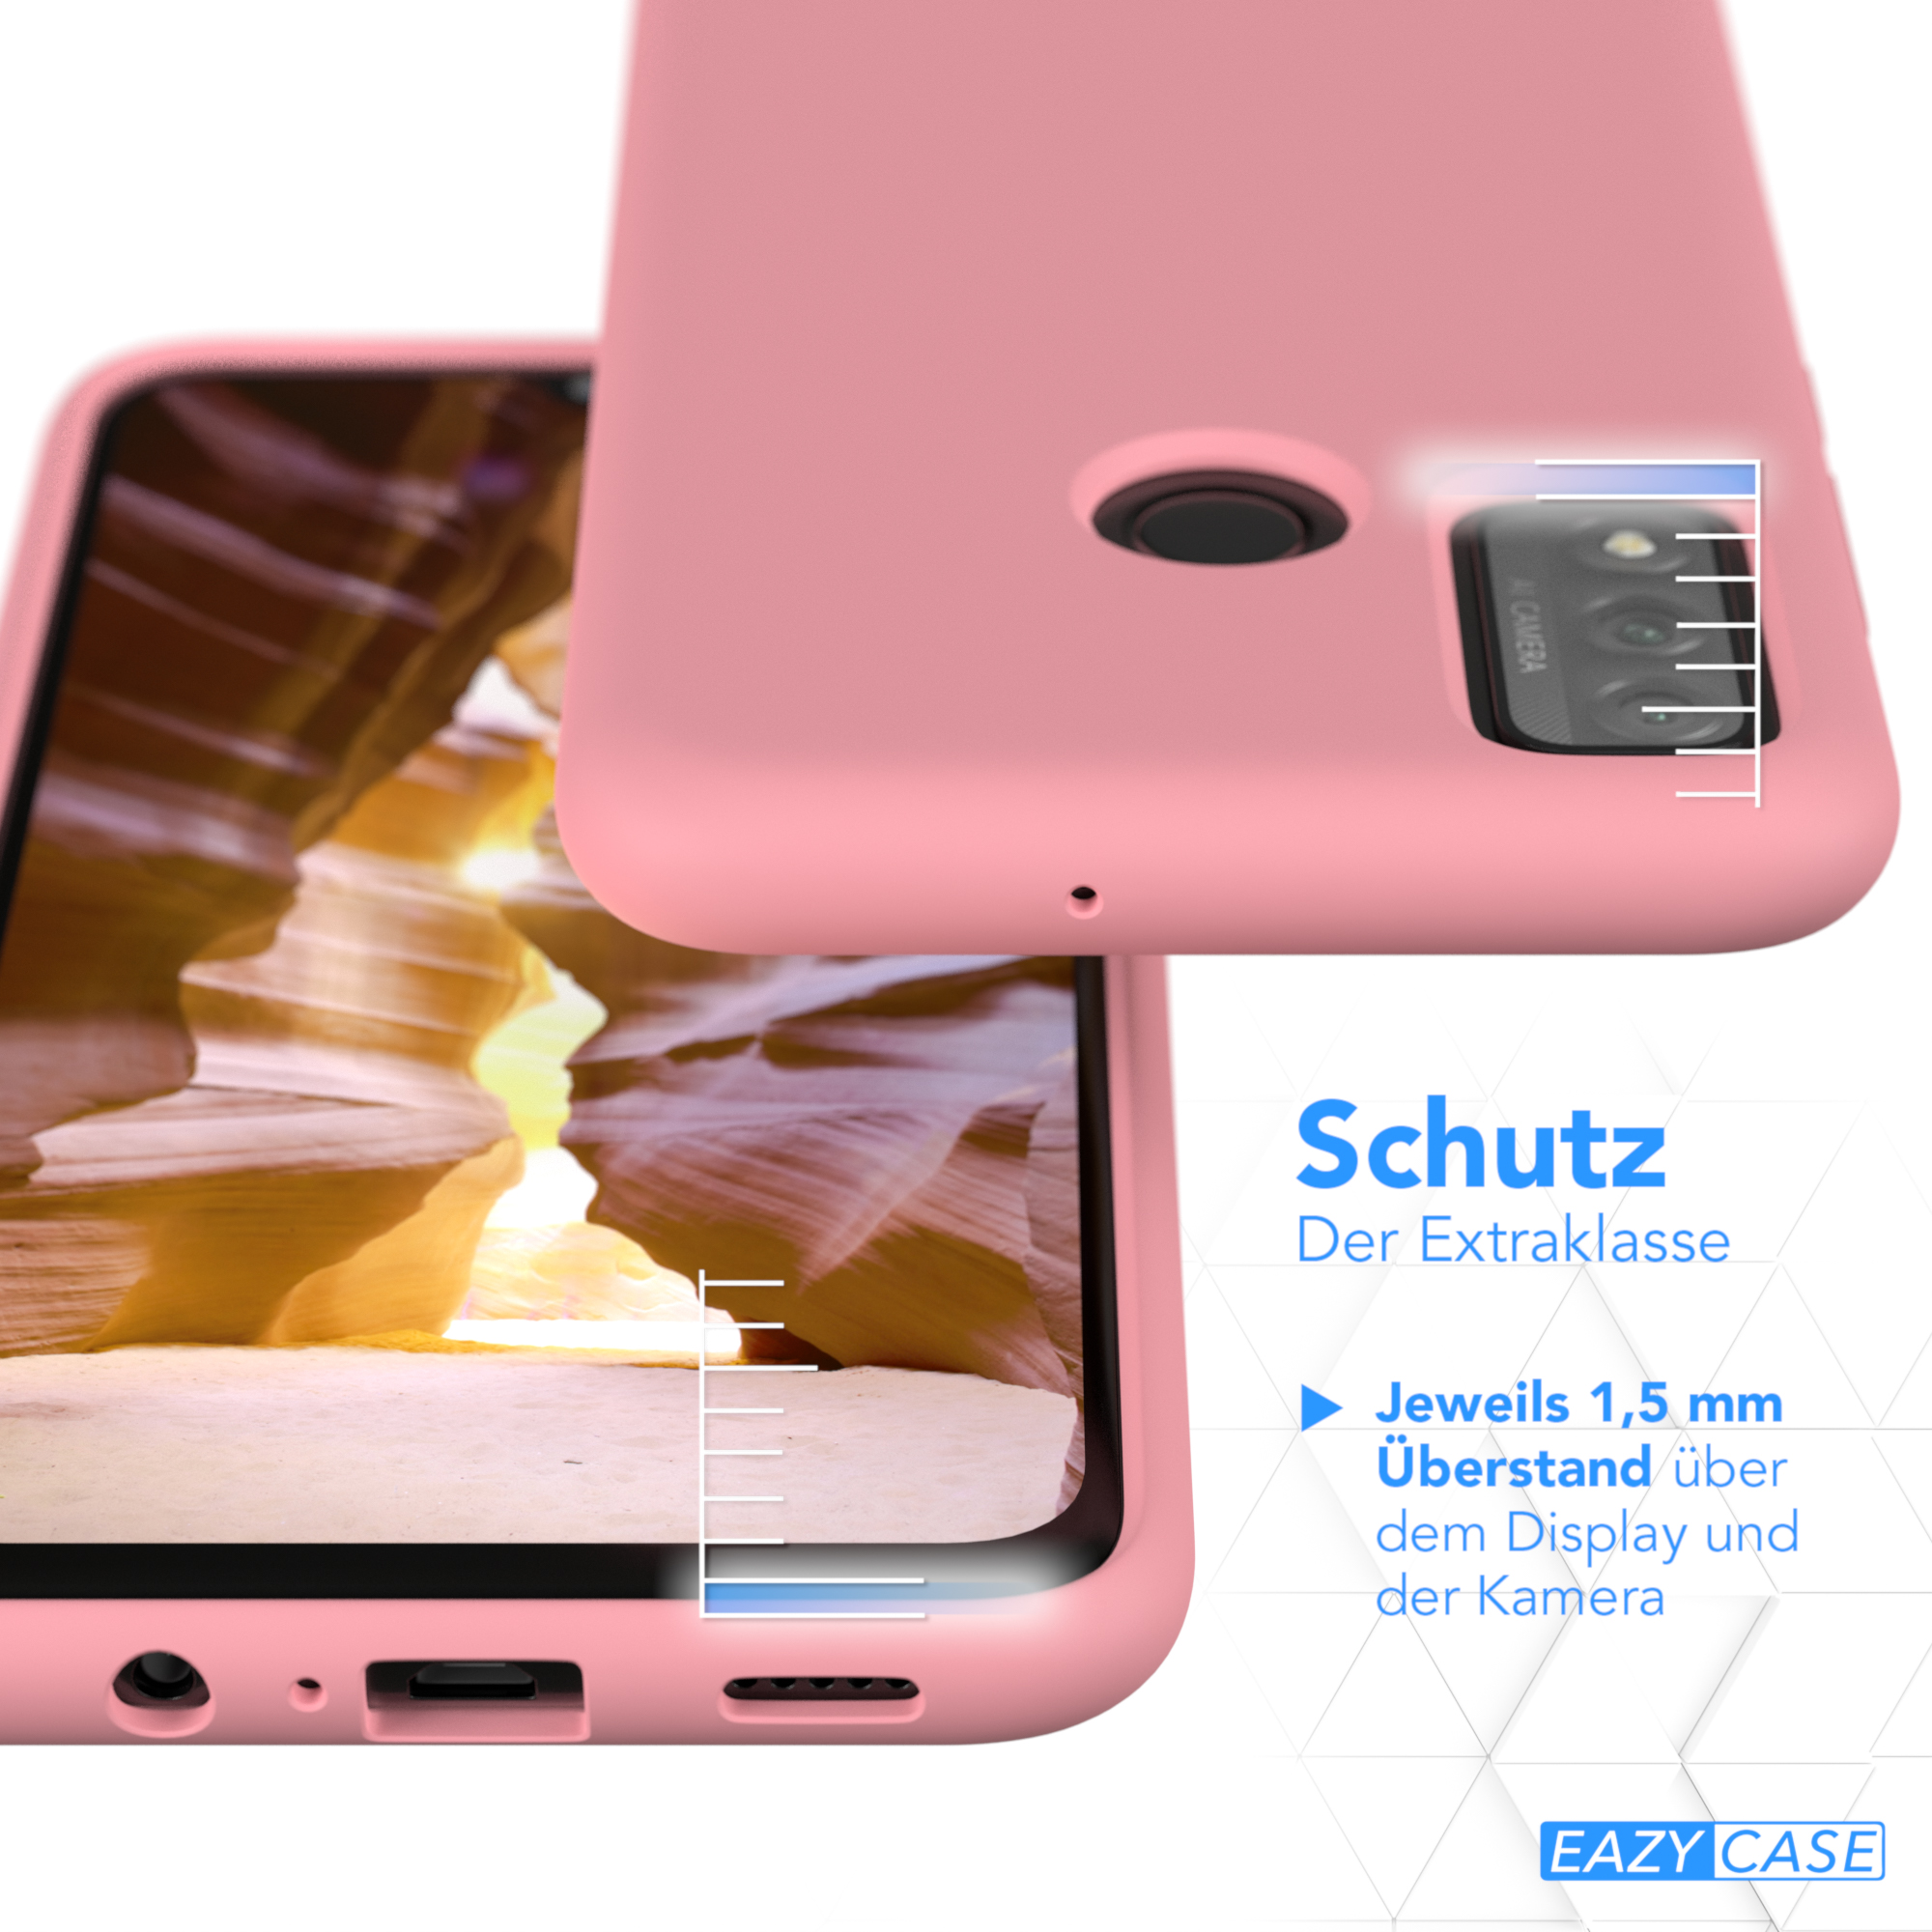 EAZY CASE Premium Smart Silikon / P Backcover, Altrosa Rosa Huawei, (2020), Handycase